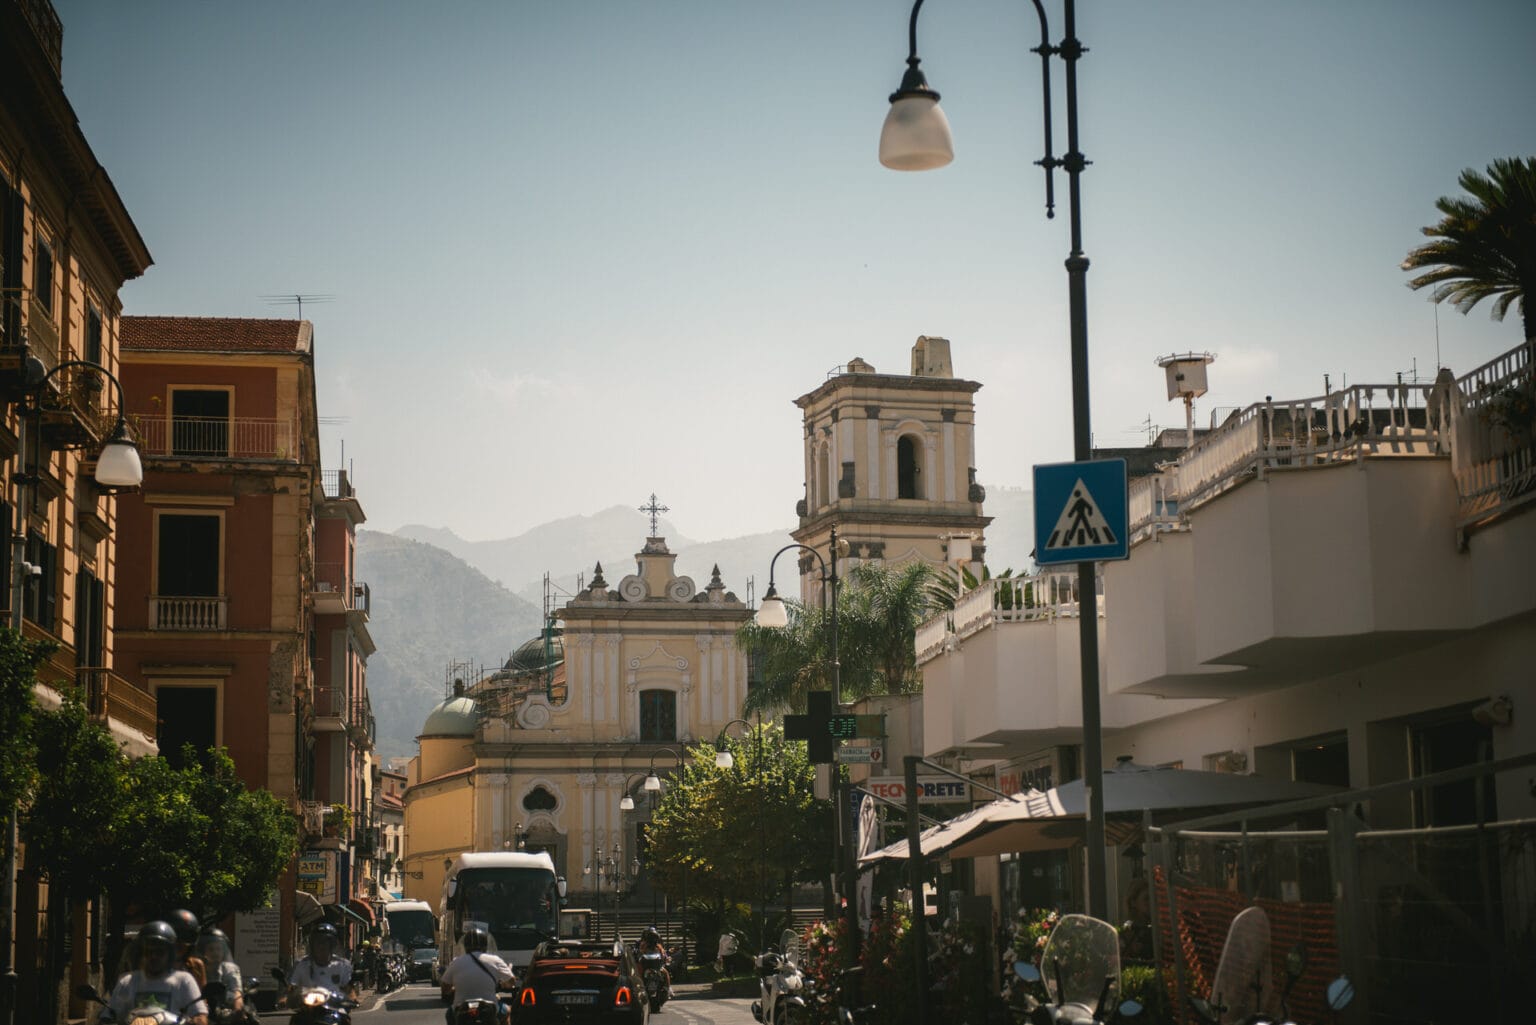 Sorrento City Center, on the Amalfi Coast